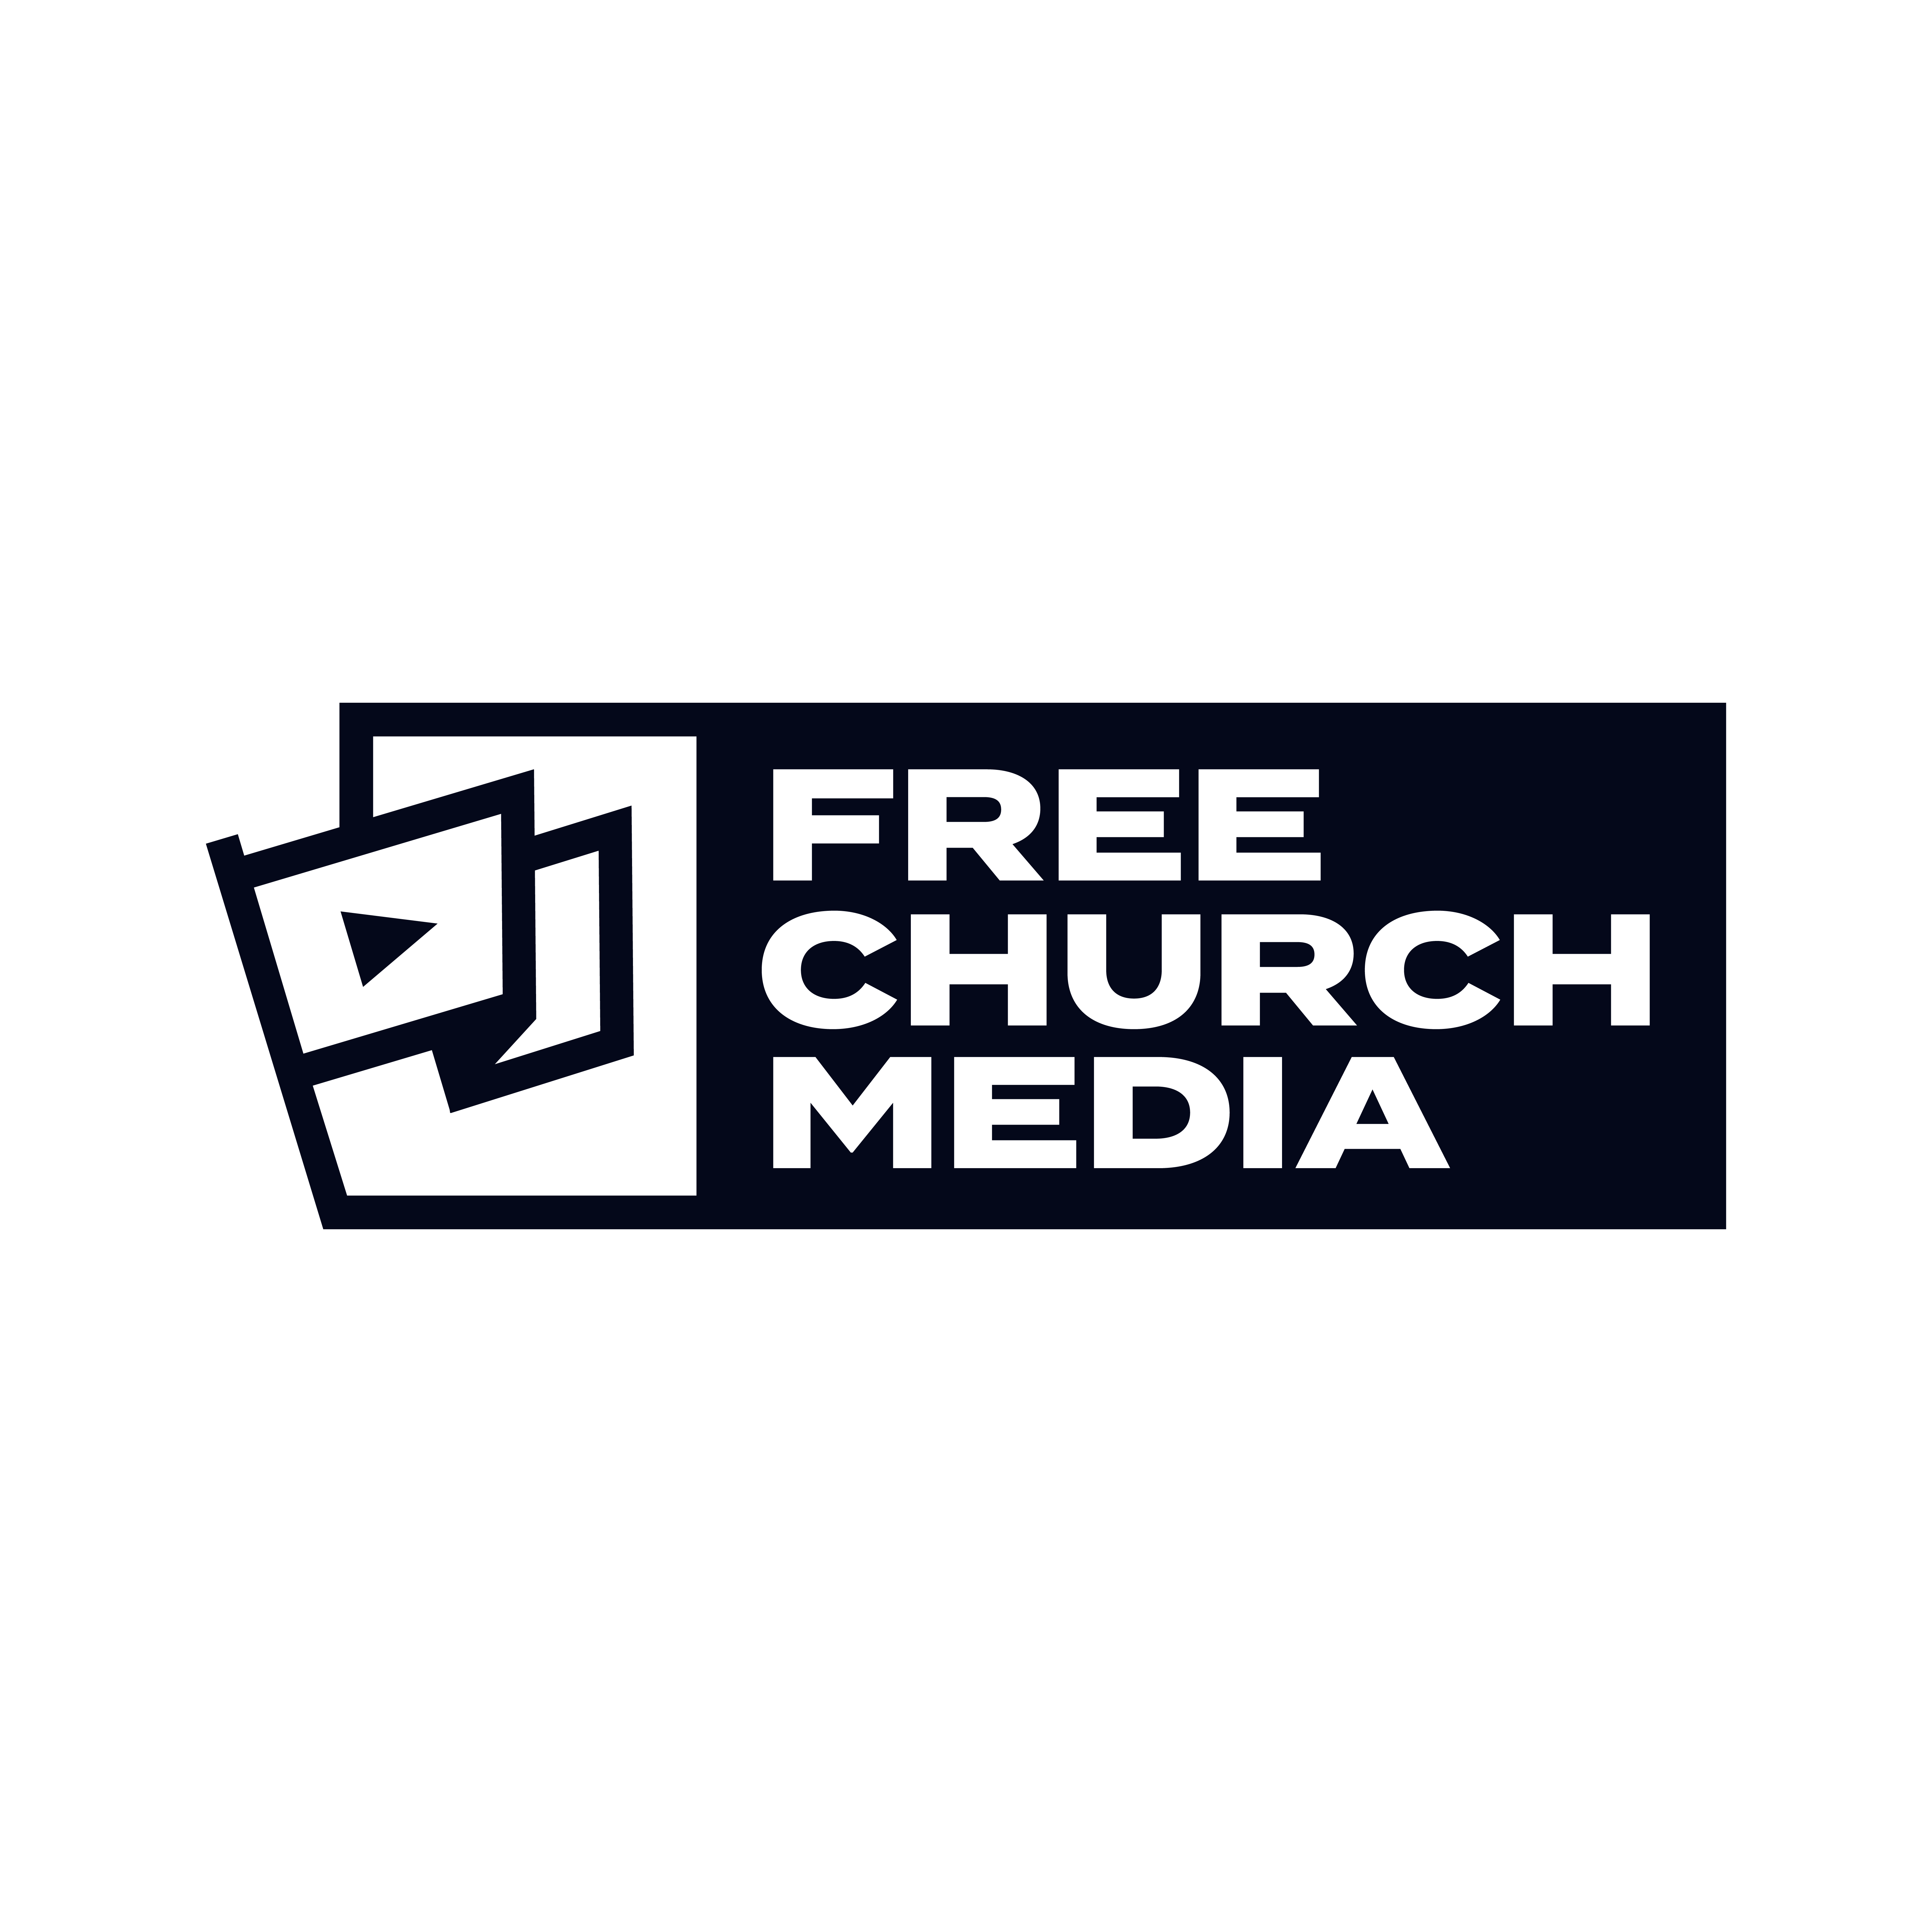 Free church media logo